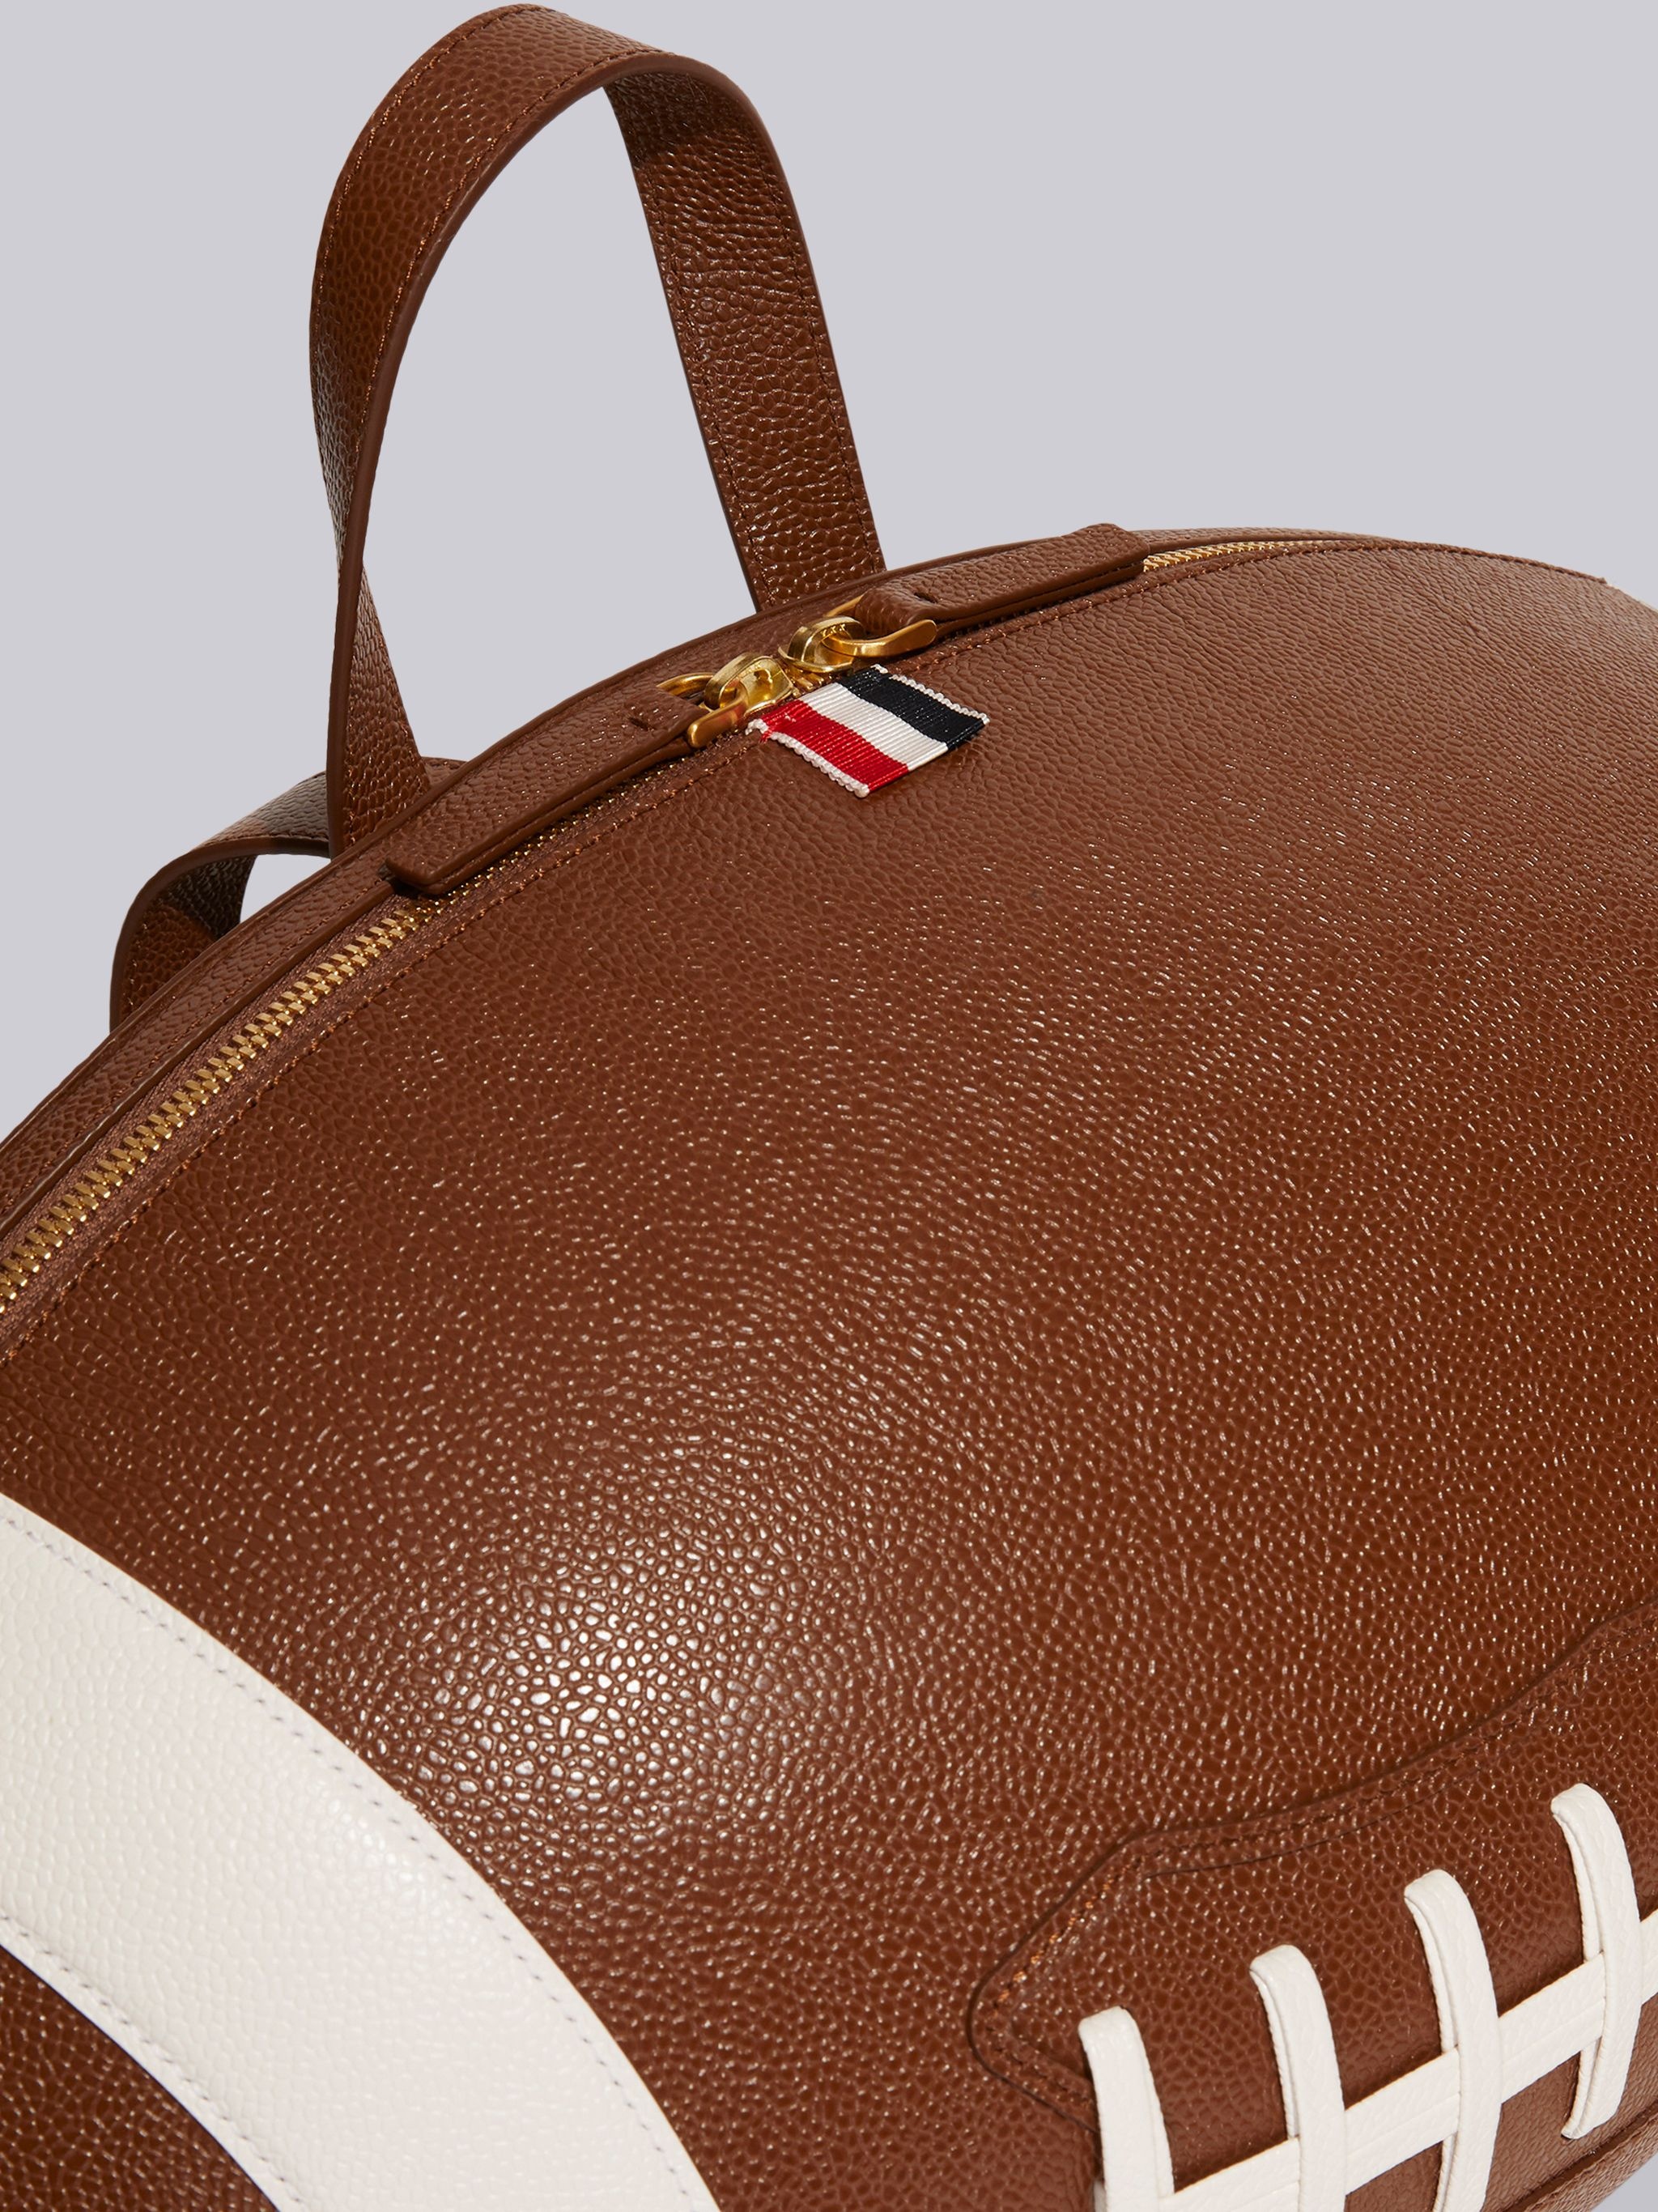 Brown Pebble Grain Leather Football Backpack - 2